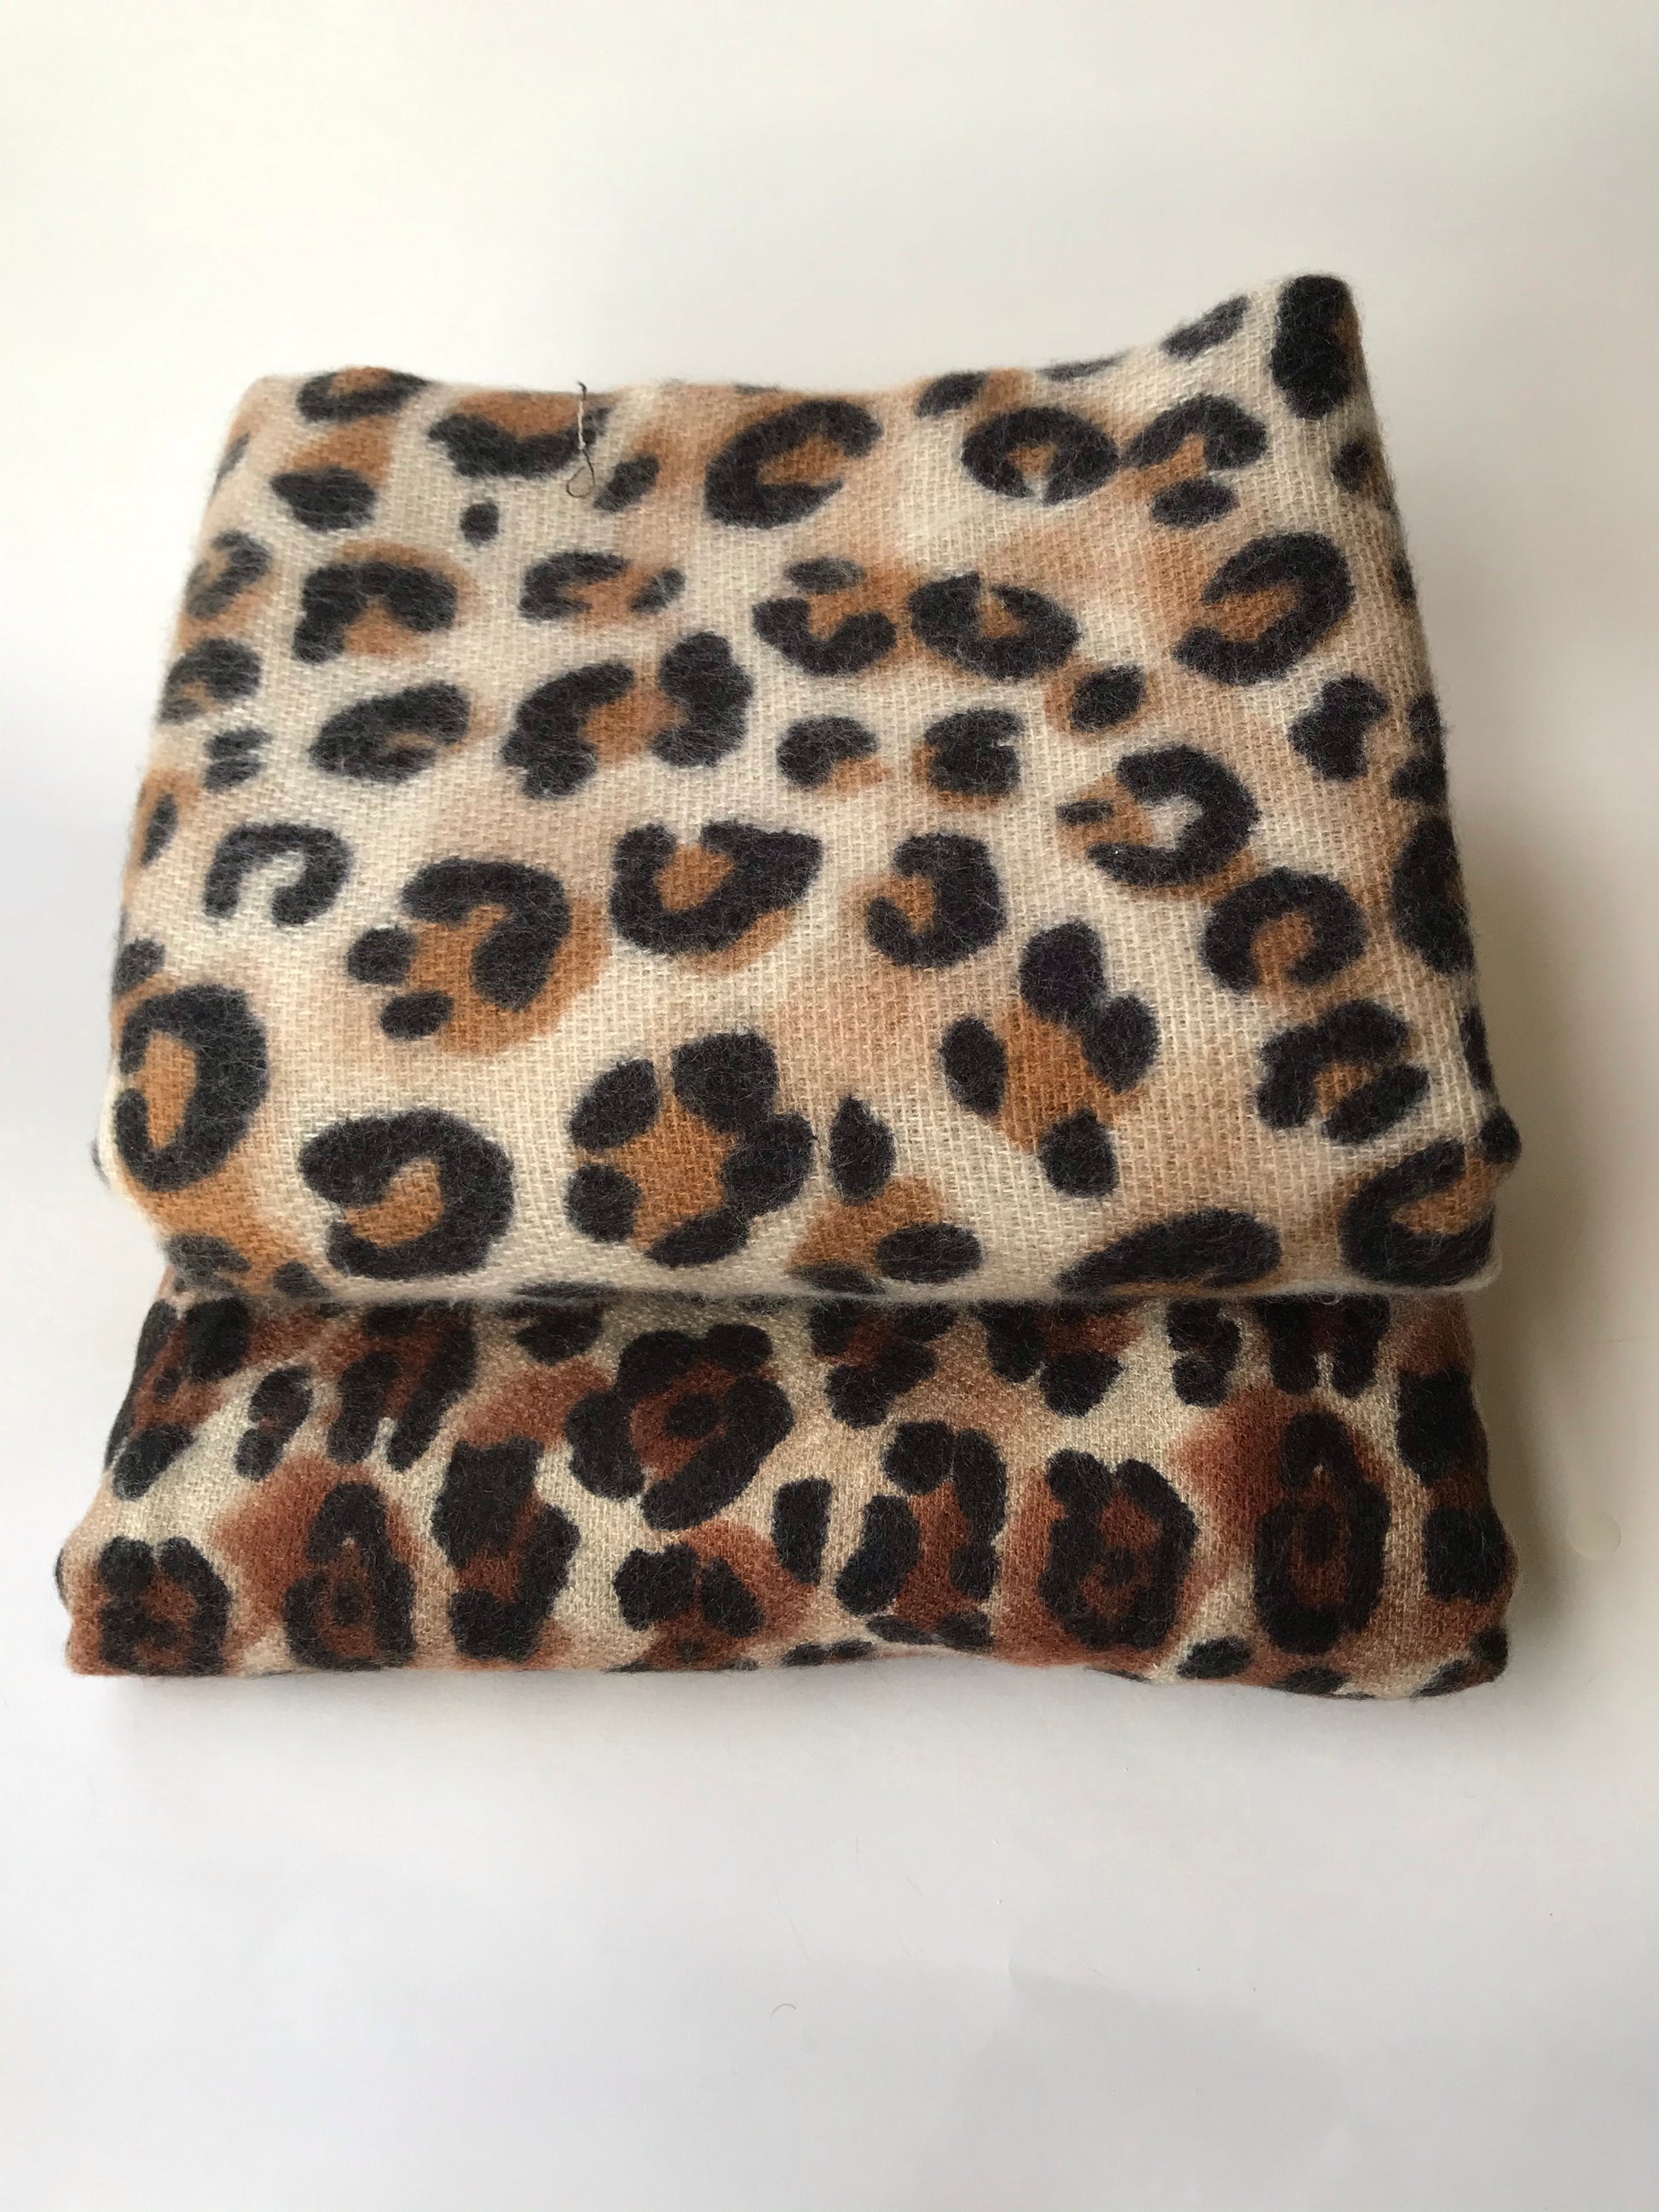 animal leopard print winter warm blanket scarf shawl light color